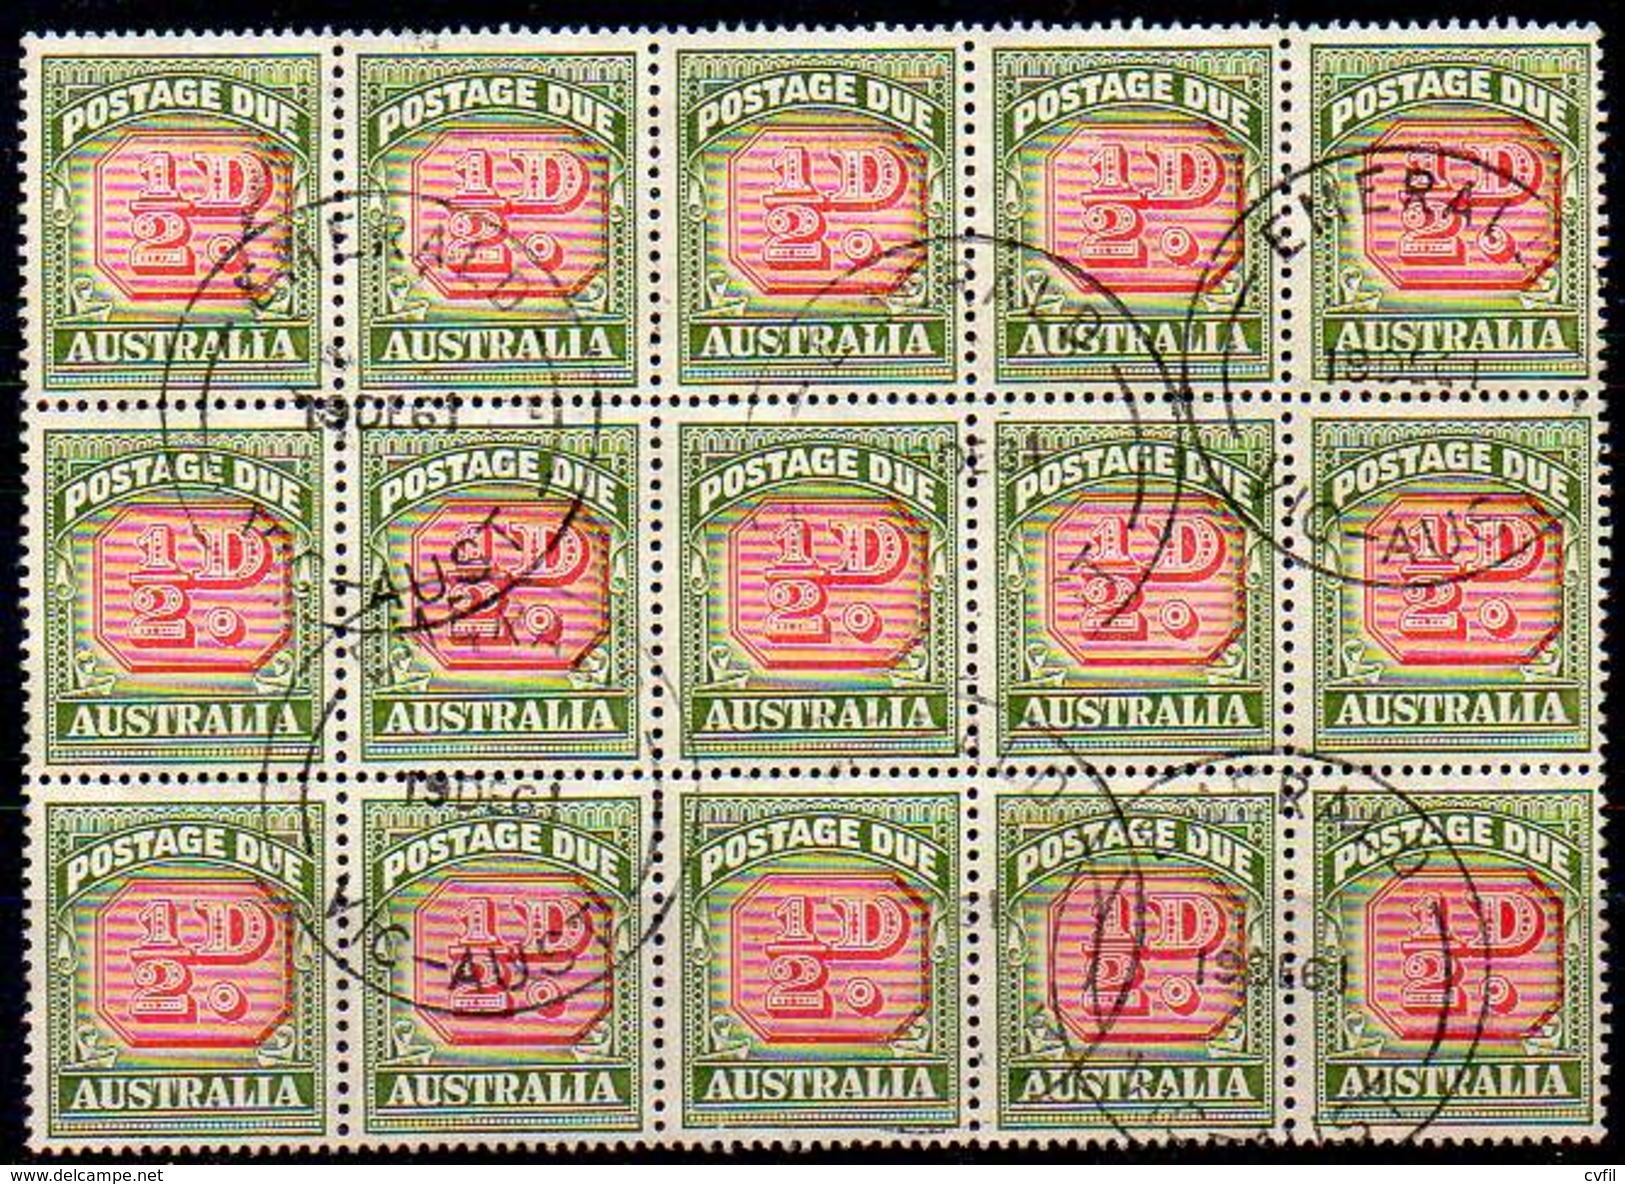 AUSTRALIA 1958. Block Of 15 Of The ½D Postage Due, Very Fine Used - Fogli Completi